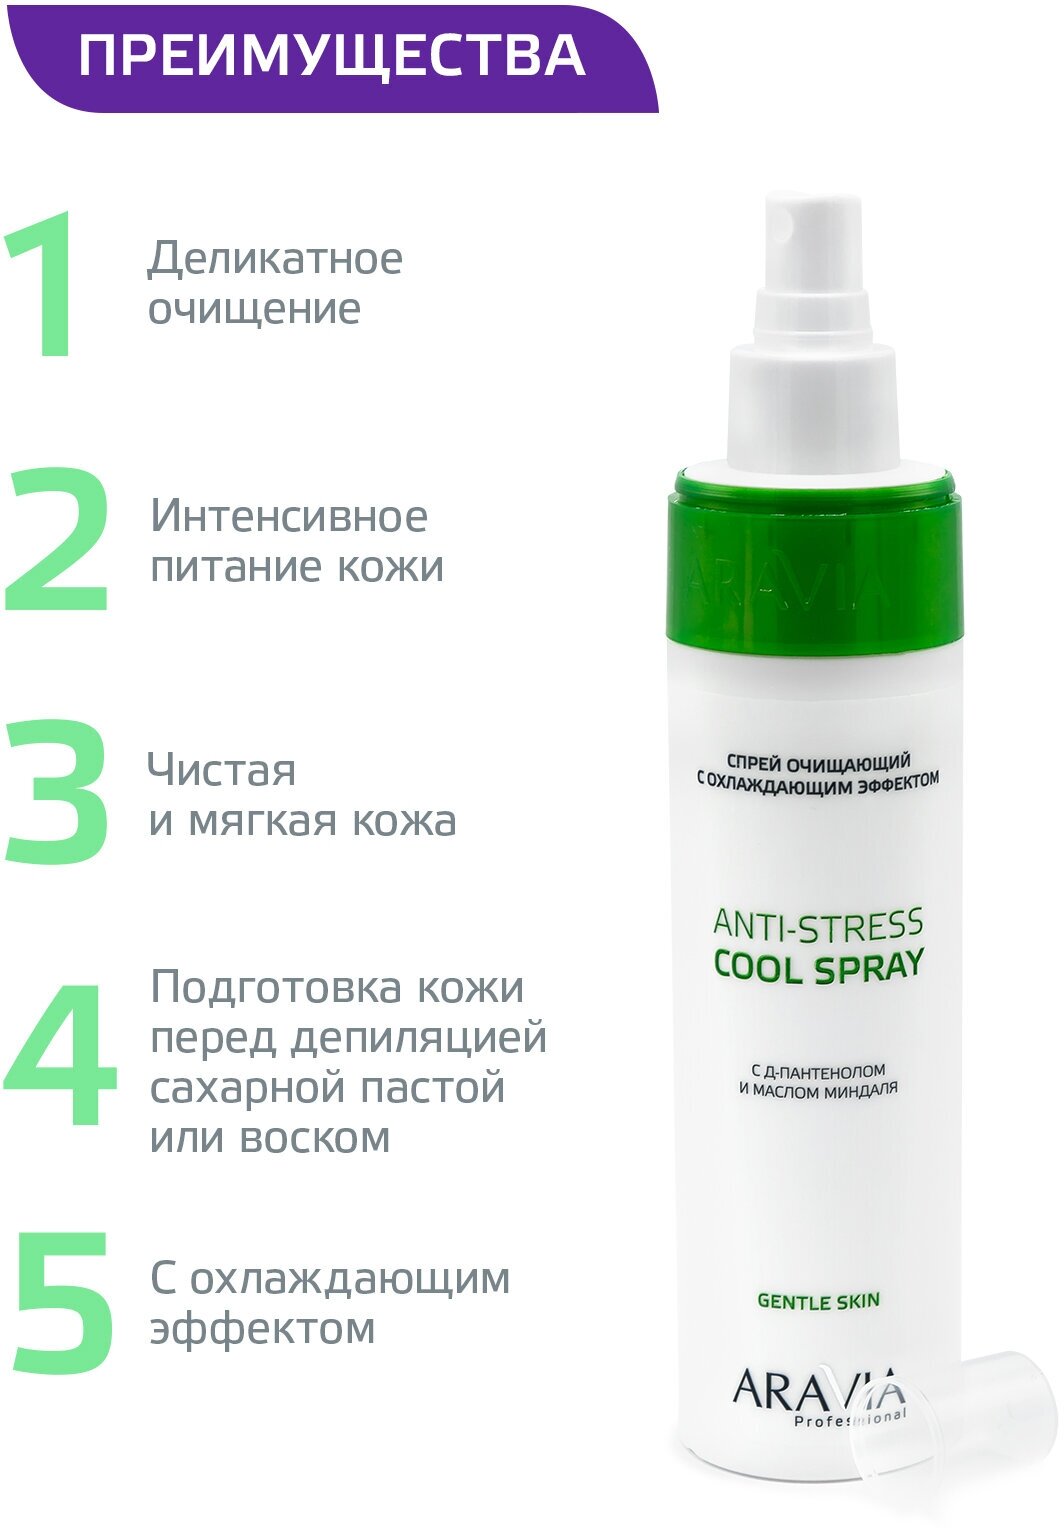 ARAVIA Спрей очищающий с охлаждающим эффектом с Д-пантенолом Anti-Stress Cool Spray, 250 мл